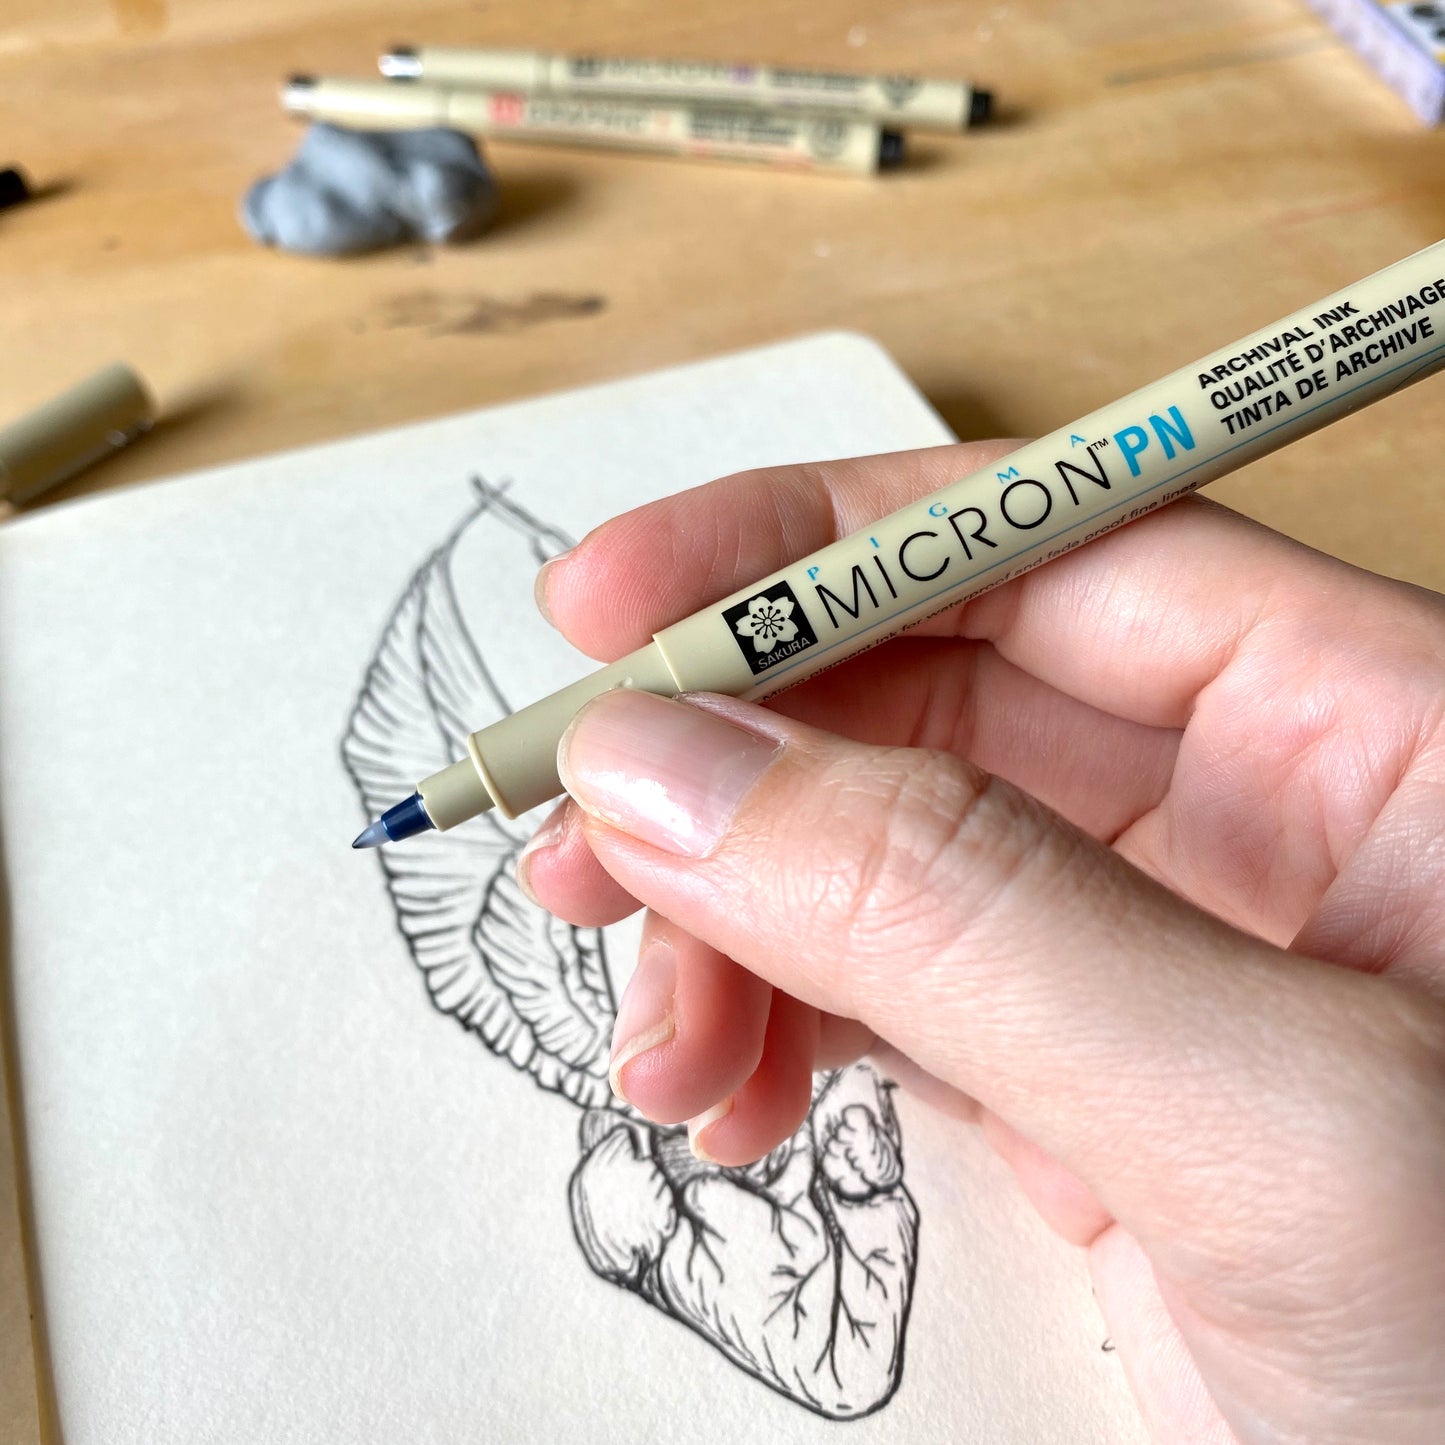 PIGMA Micron PN (Plastic Nib) Pen